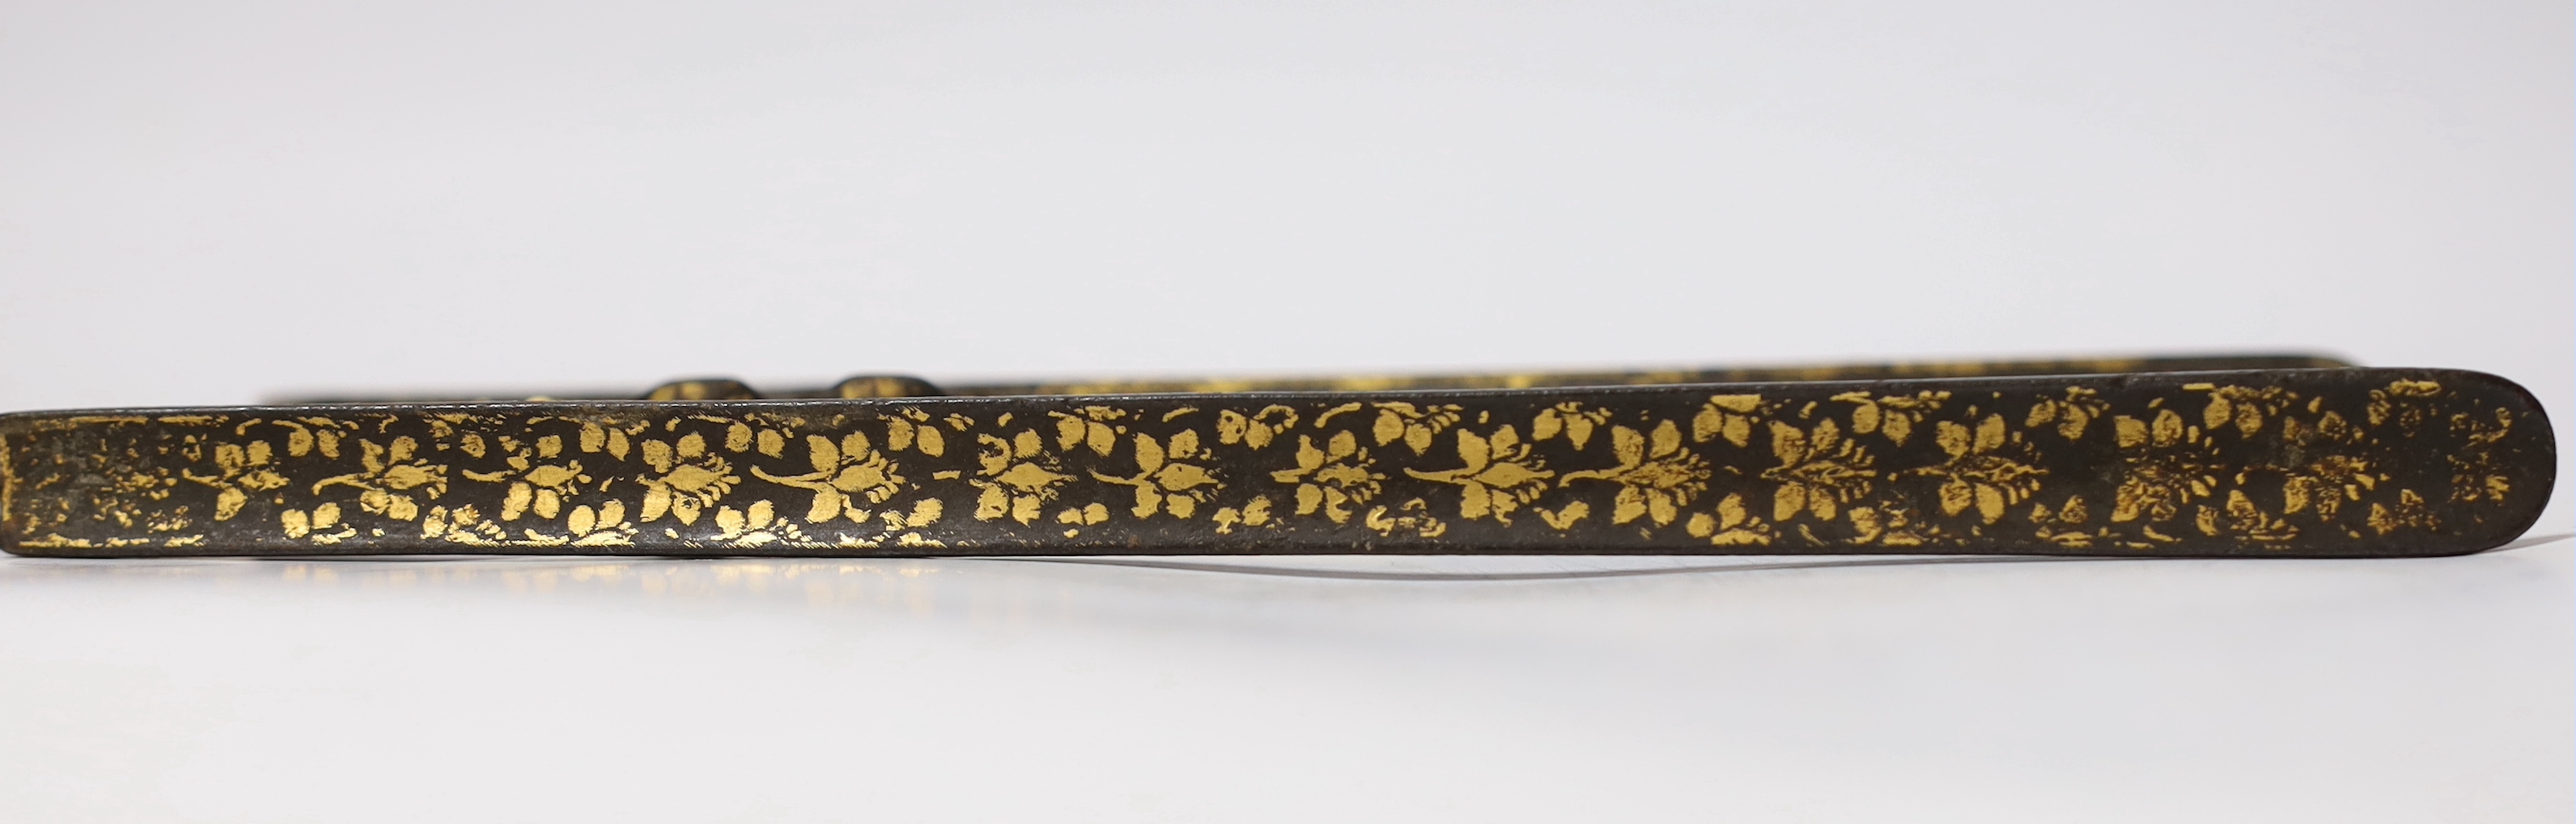 An Indian Katar with gilt decorated grip, blade 28cm